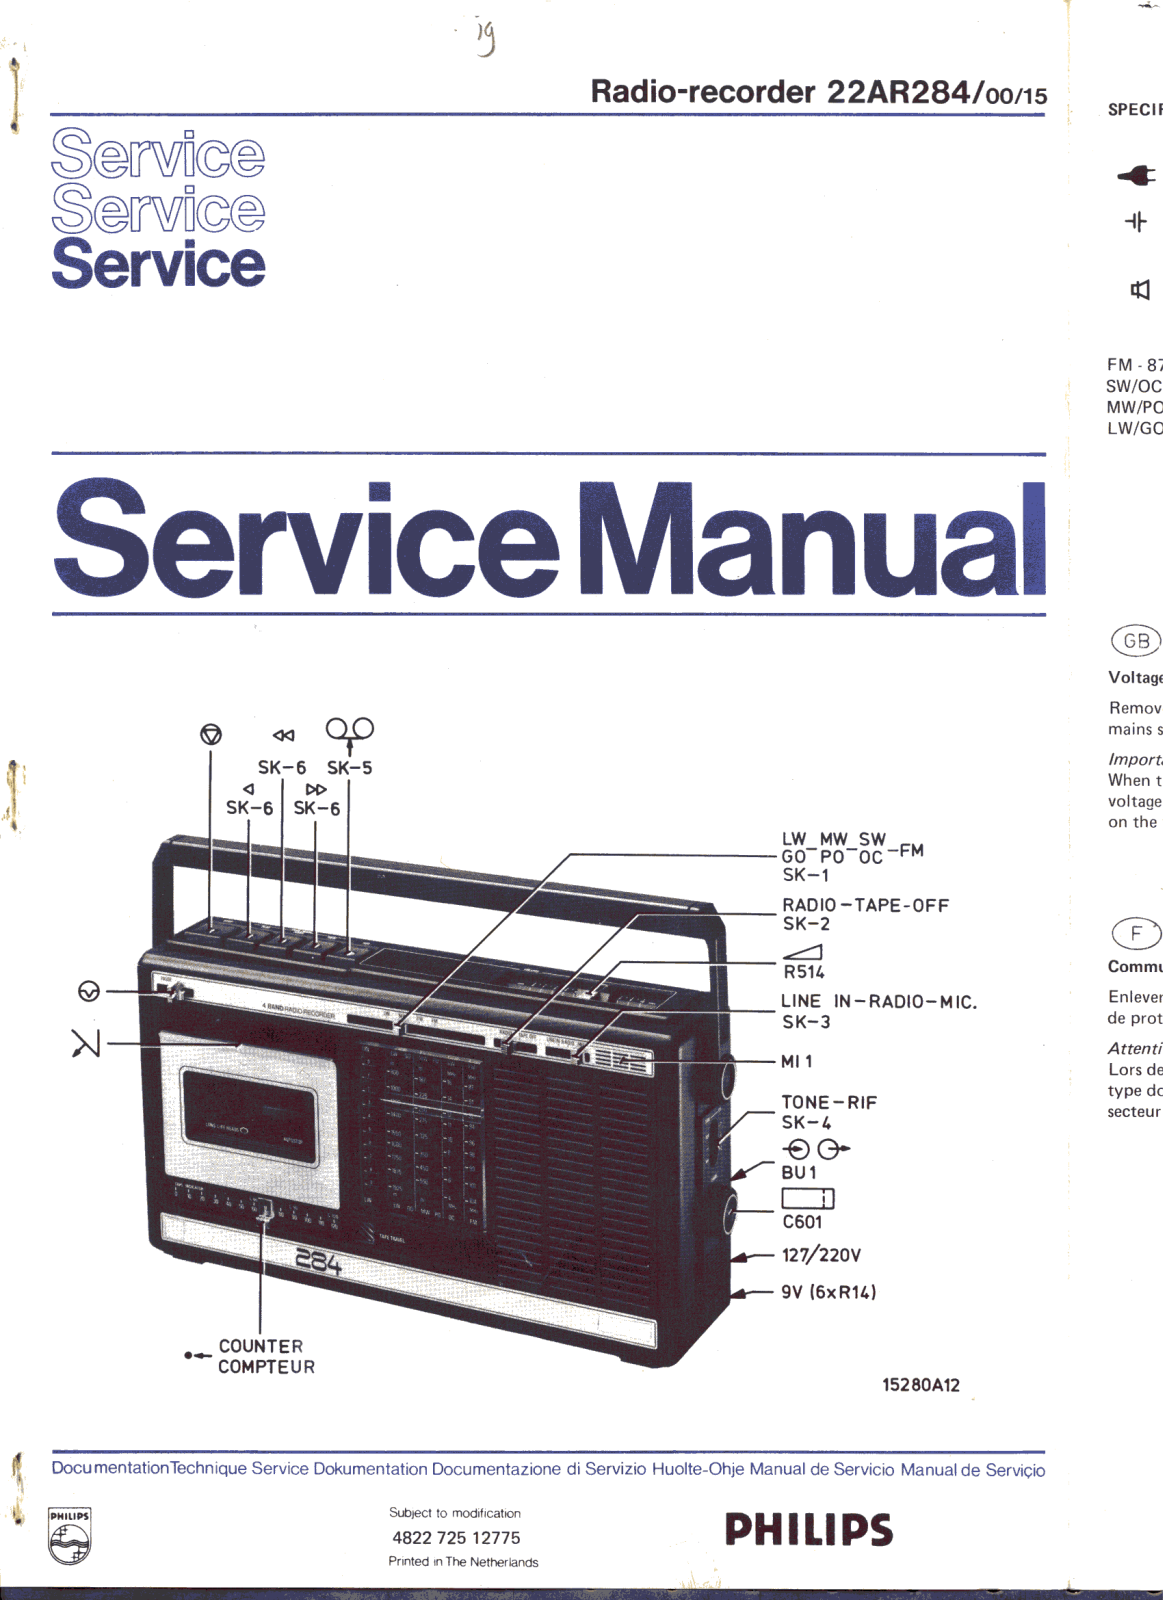 Philips 22-AR-284 Service Manual